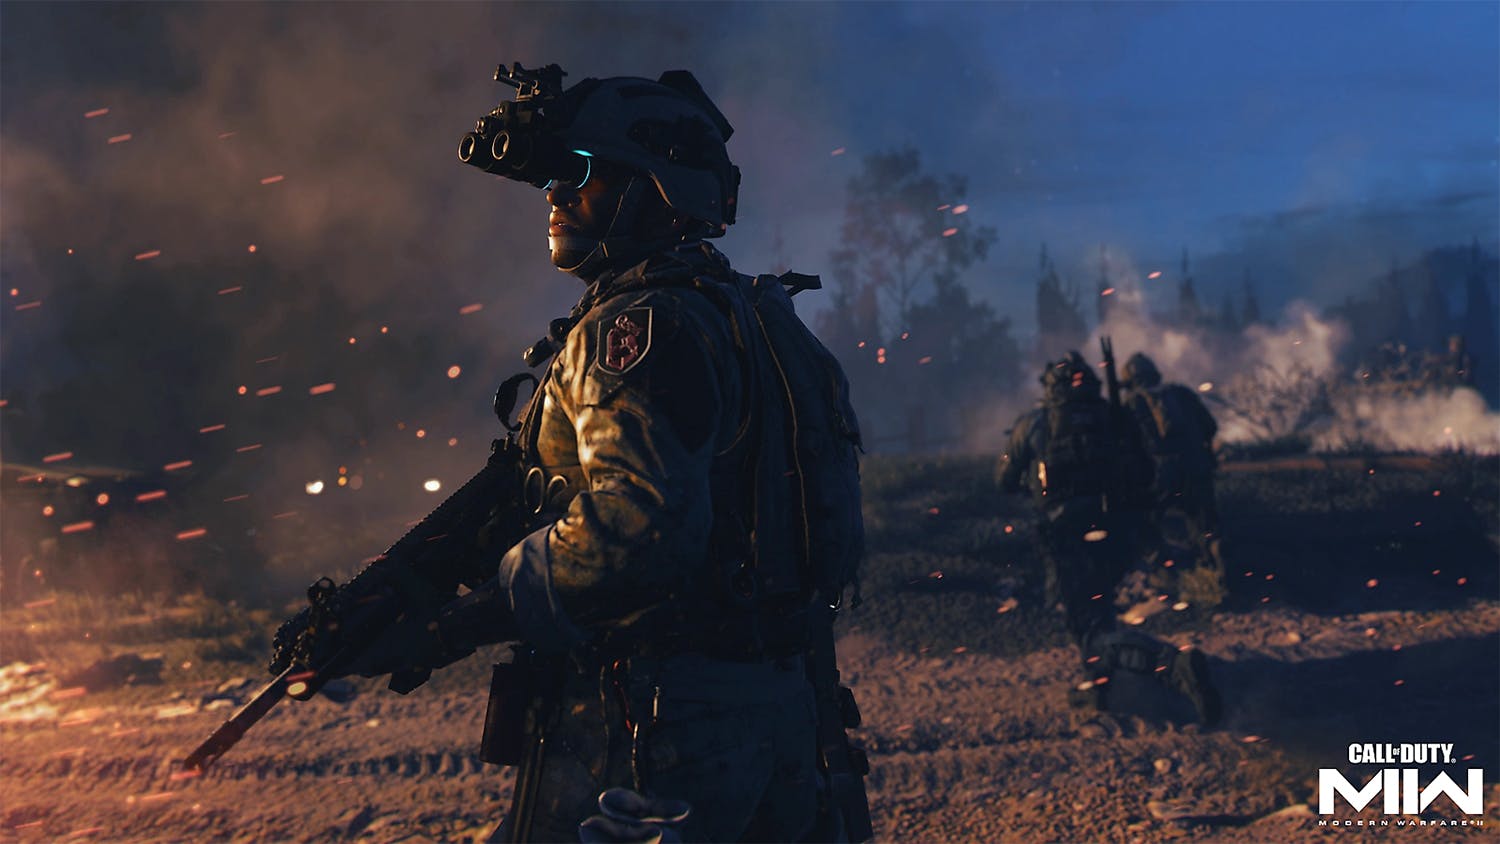 PS4 - Call of Duty: Modern Warfare 2 (R16)